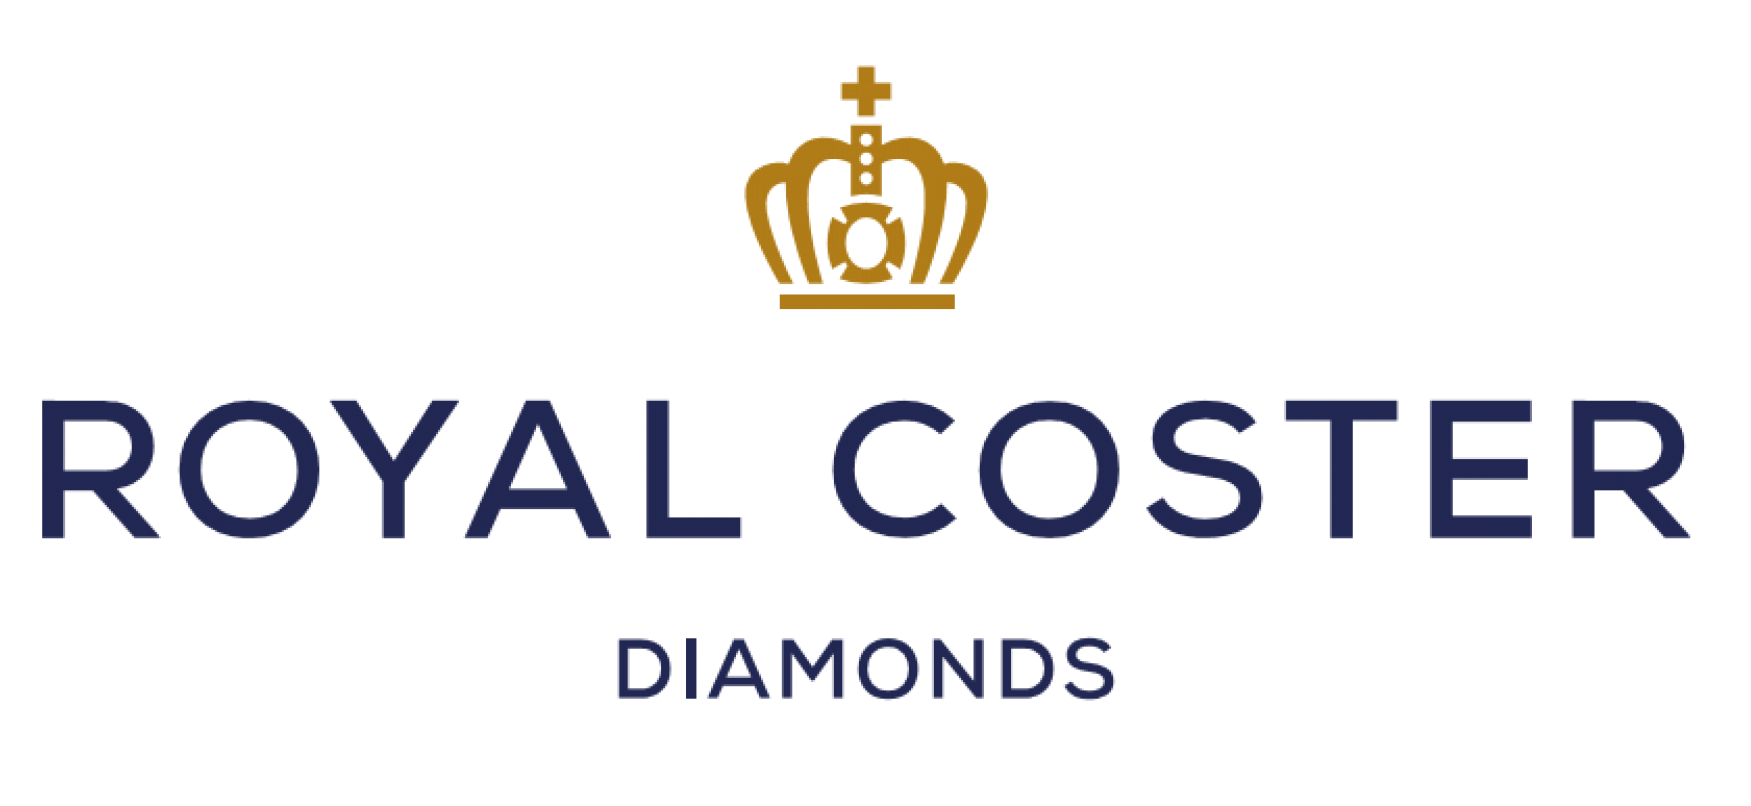 Royal Coster Diamonds logo